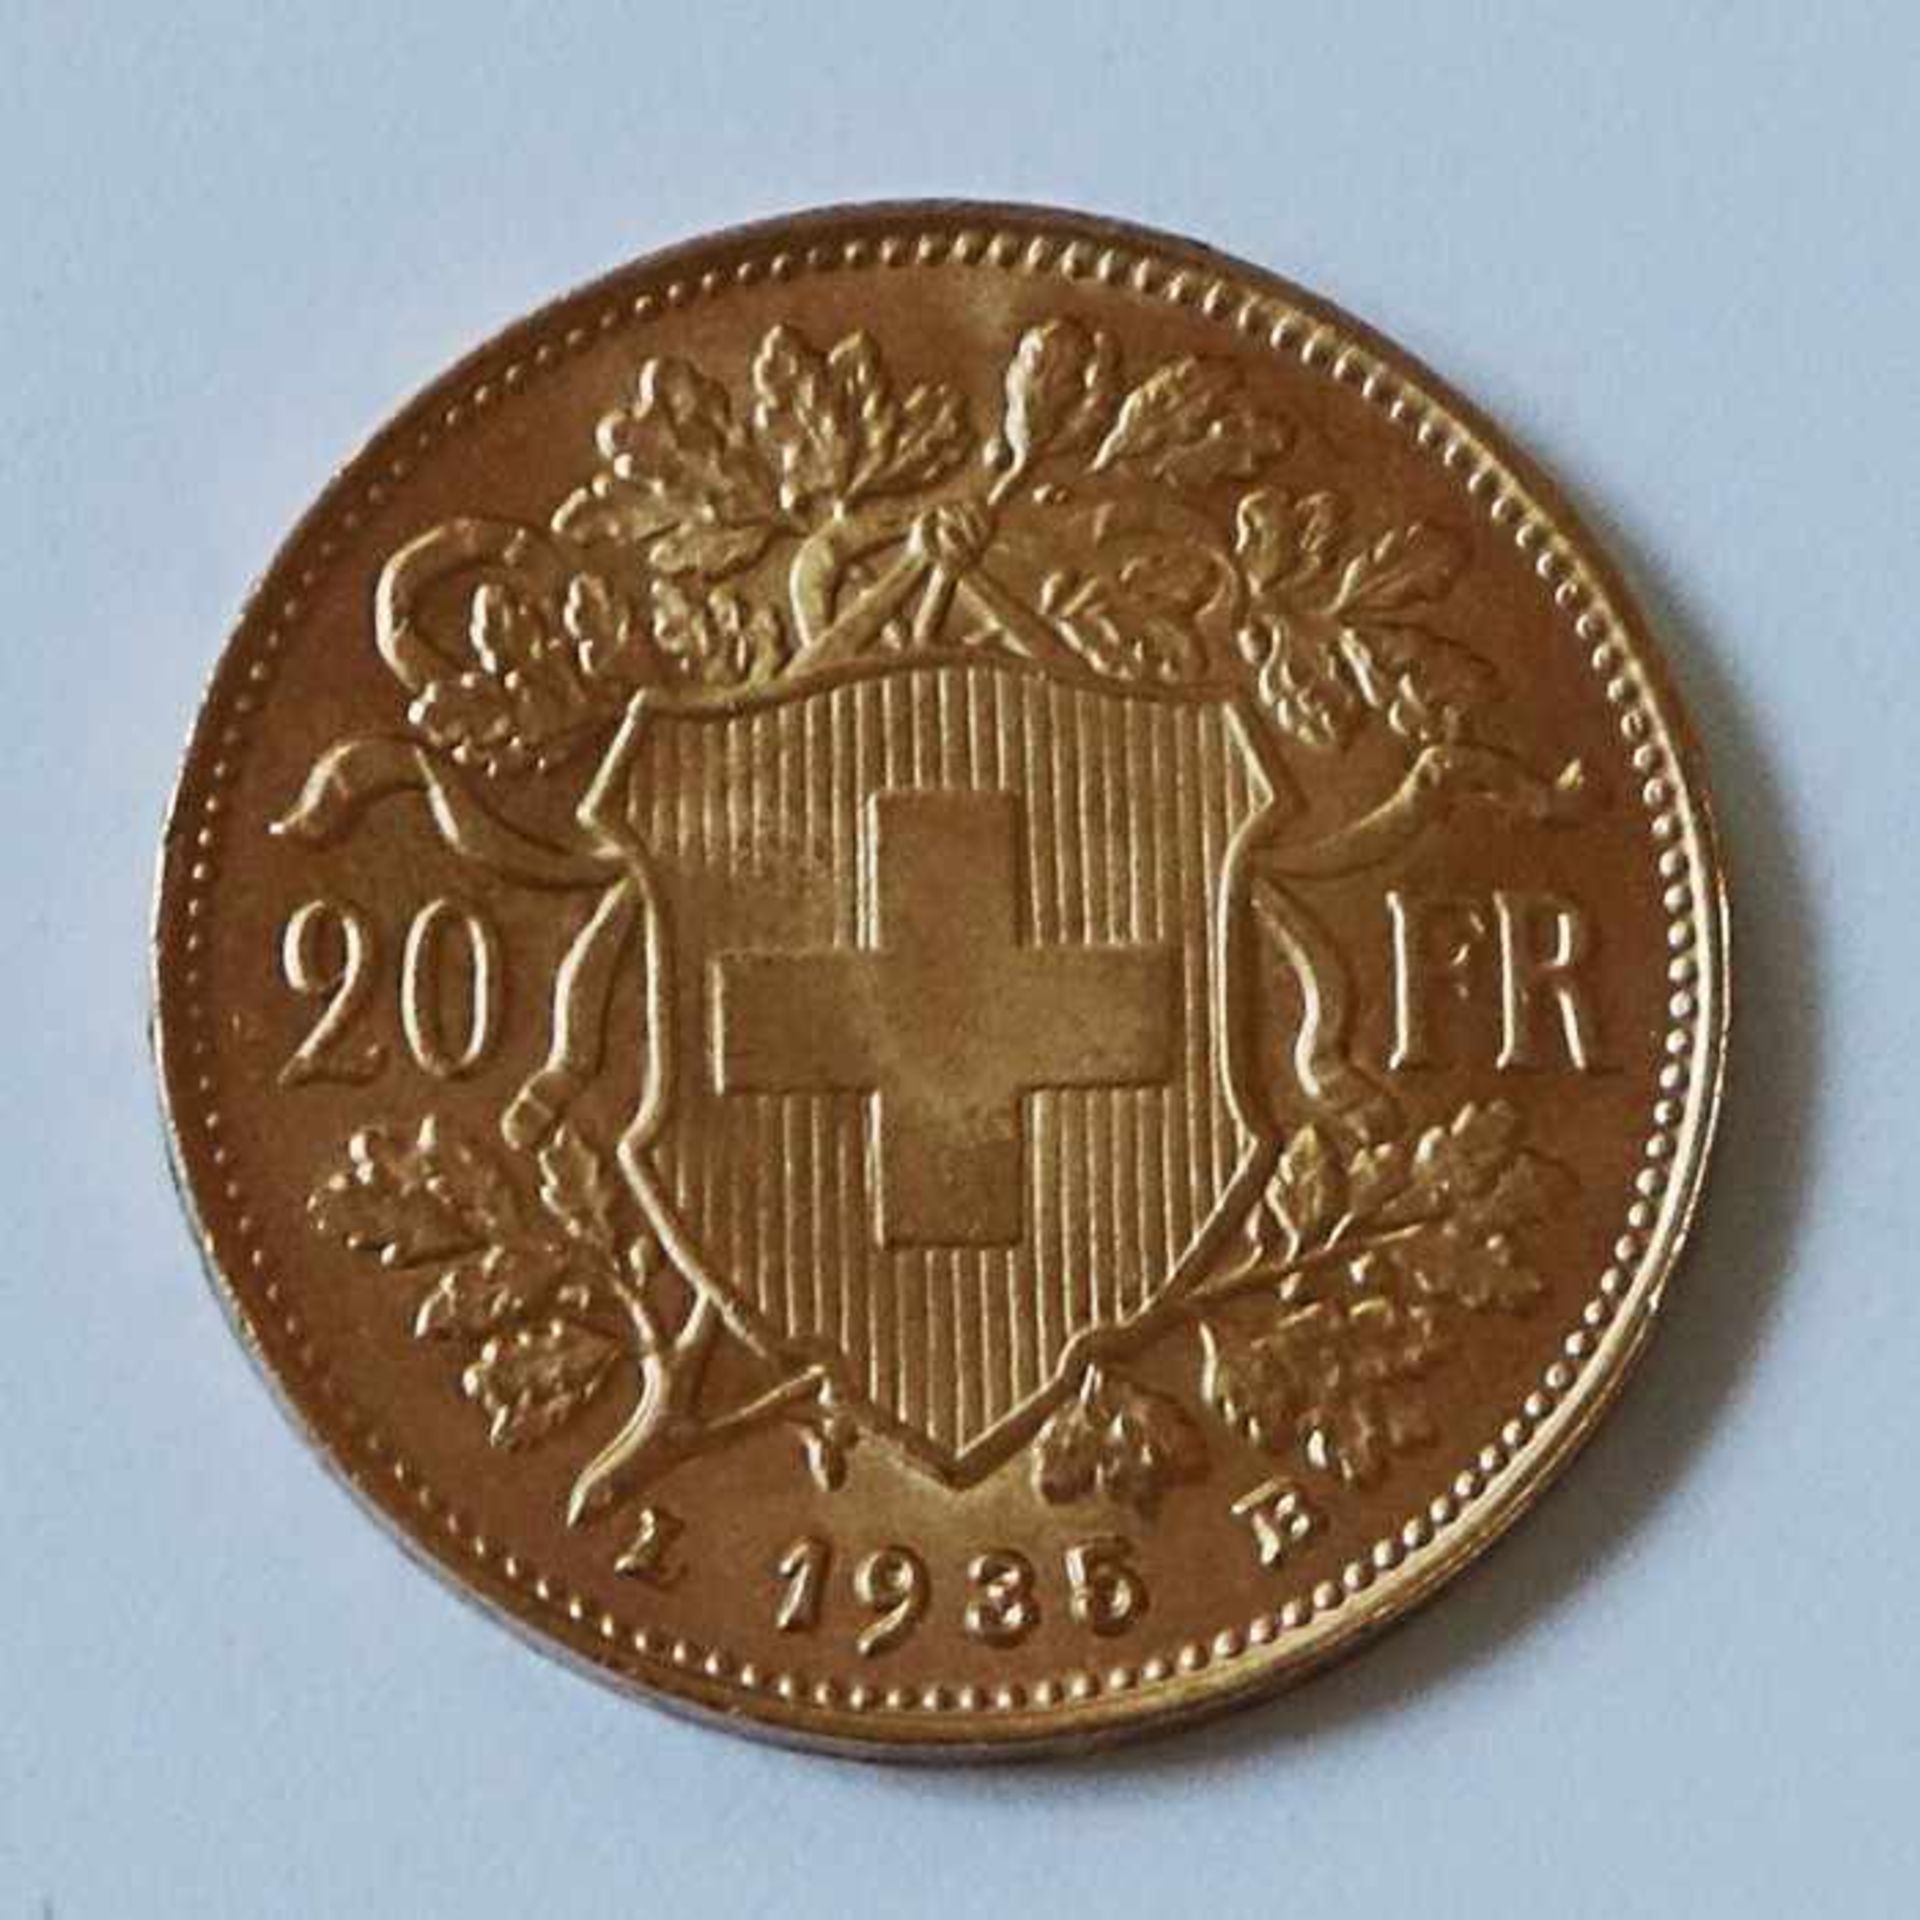 Gold - Schweiz 20 Franken 1935Schweizer Vreneli, LB, D 21mm, G 6,45g, vz - Bild 3 aus 4